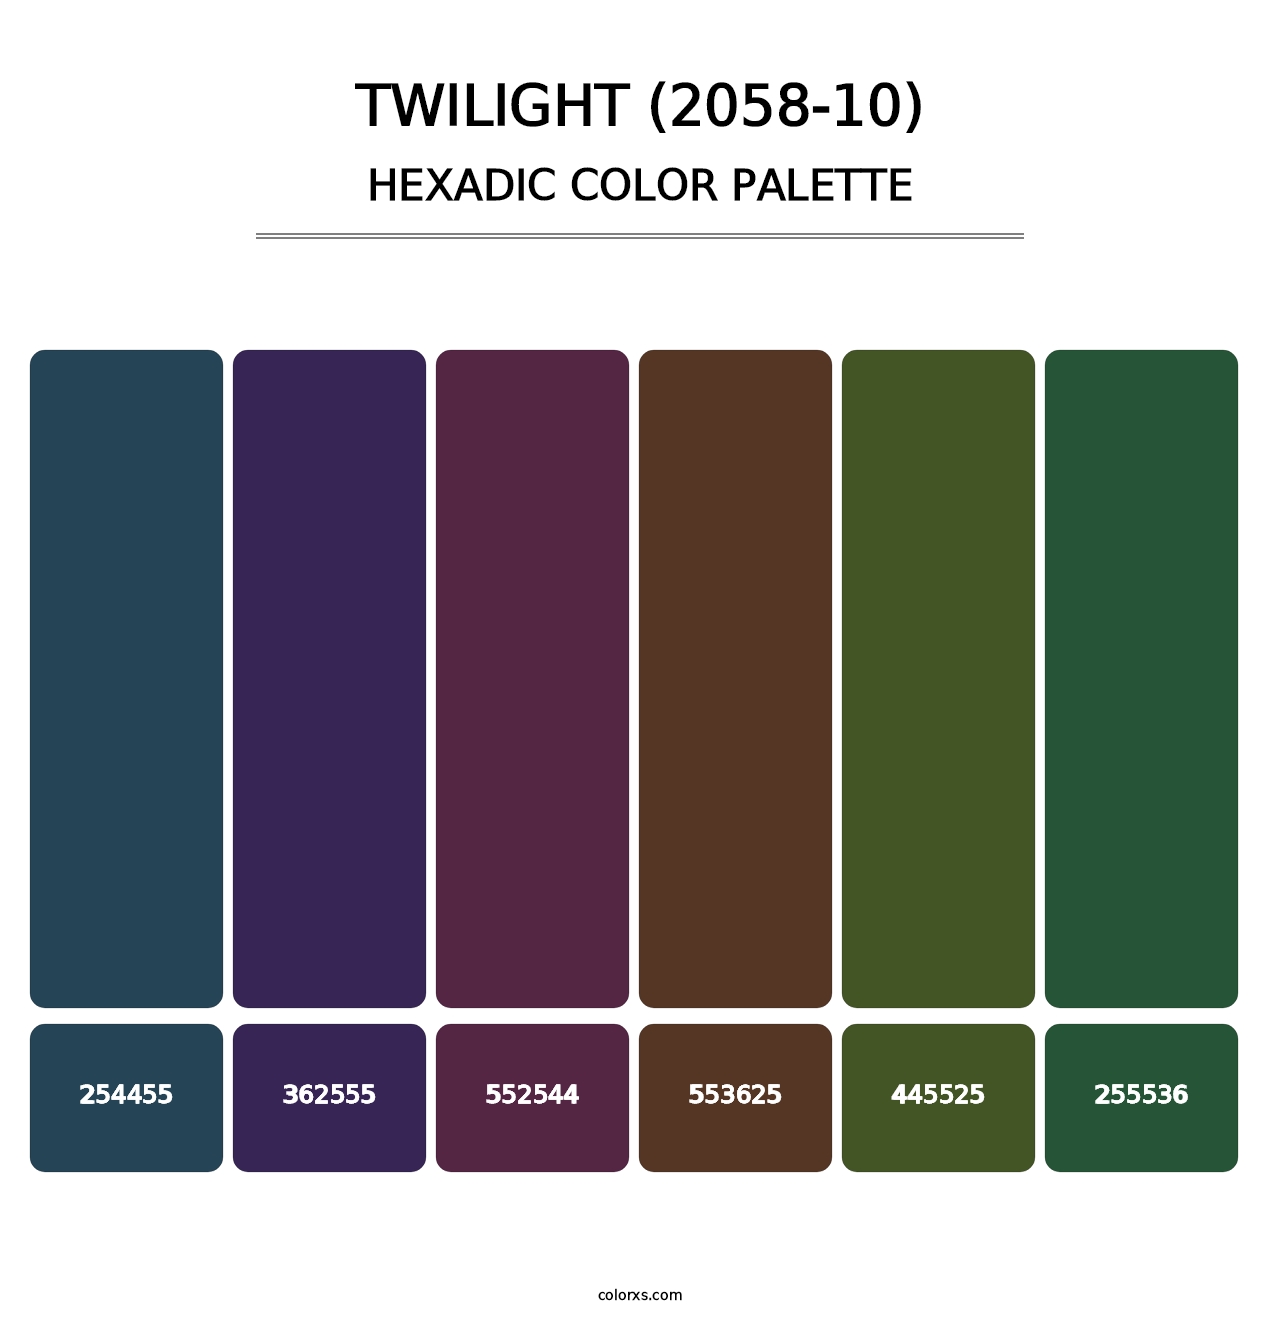 Twilight (2058-10) - Hexadic Color Palette